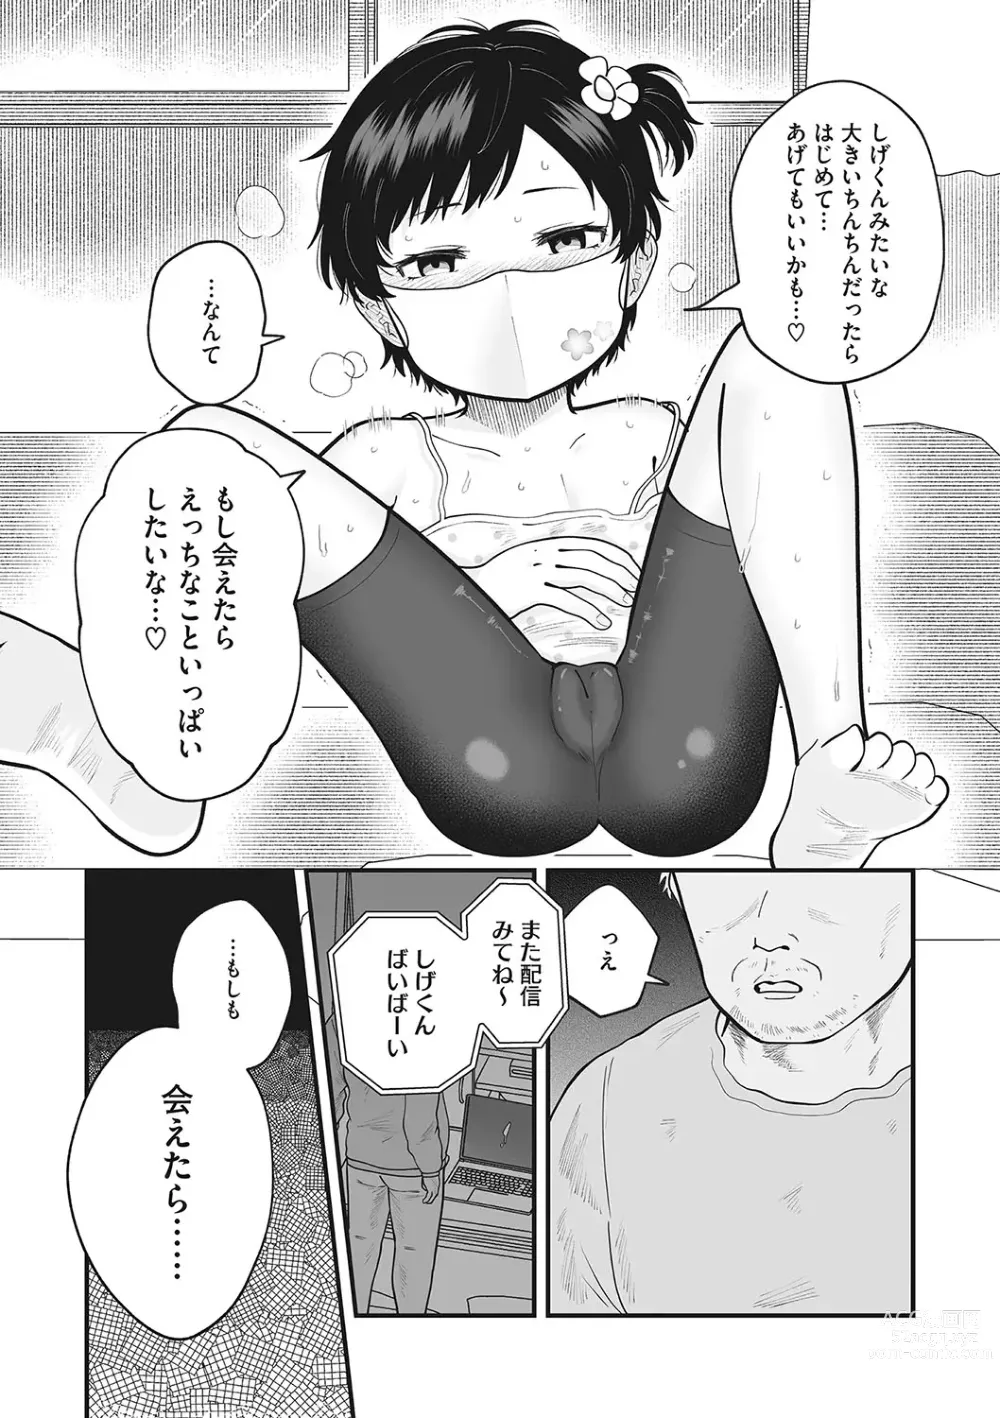 Page 8 of manga Little Girl Strike Vol. 30